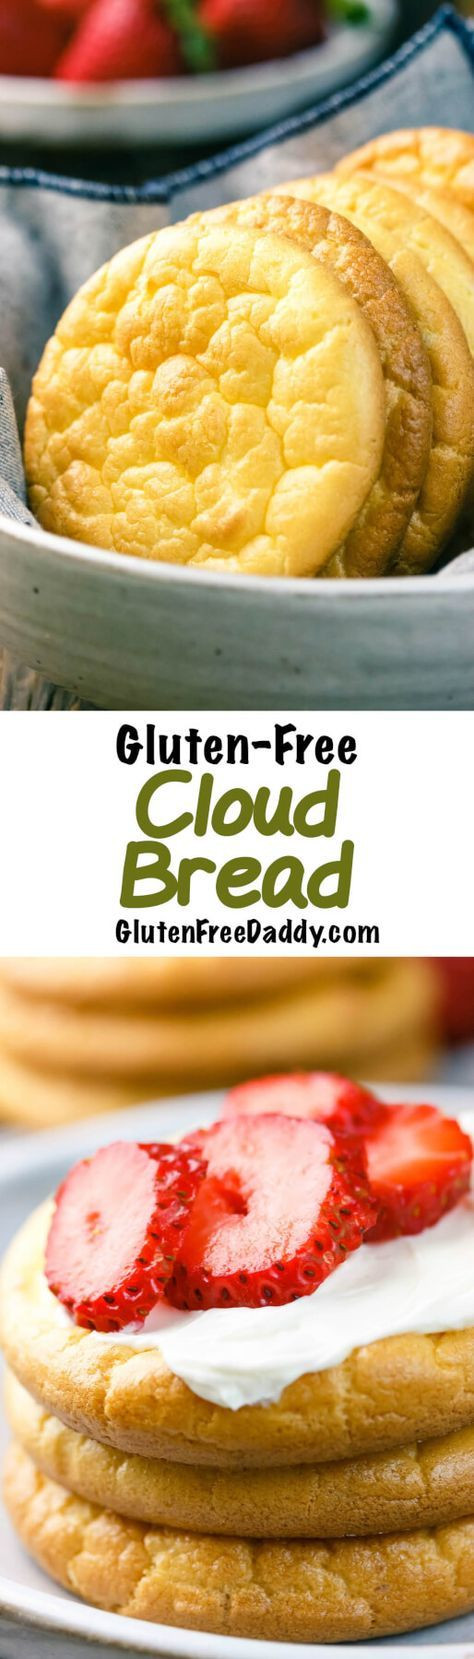 Keto Cloud Bread 3 Ingredient
 5 Ingre nt Keto Cloud Bread Recipe